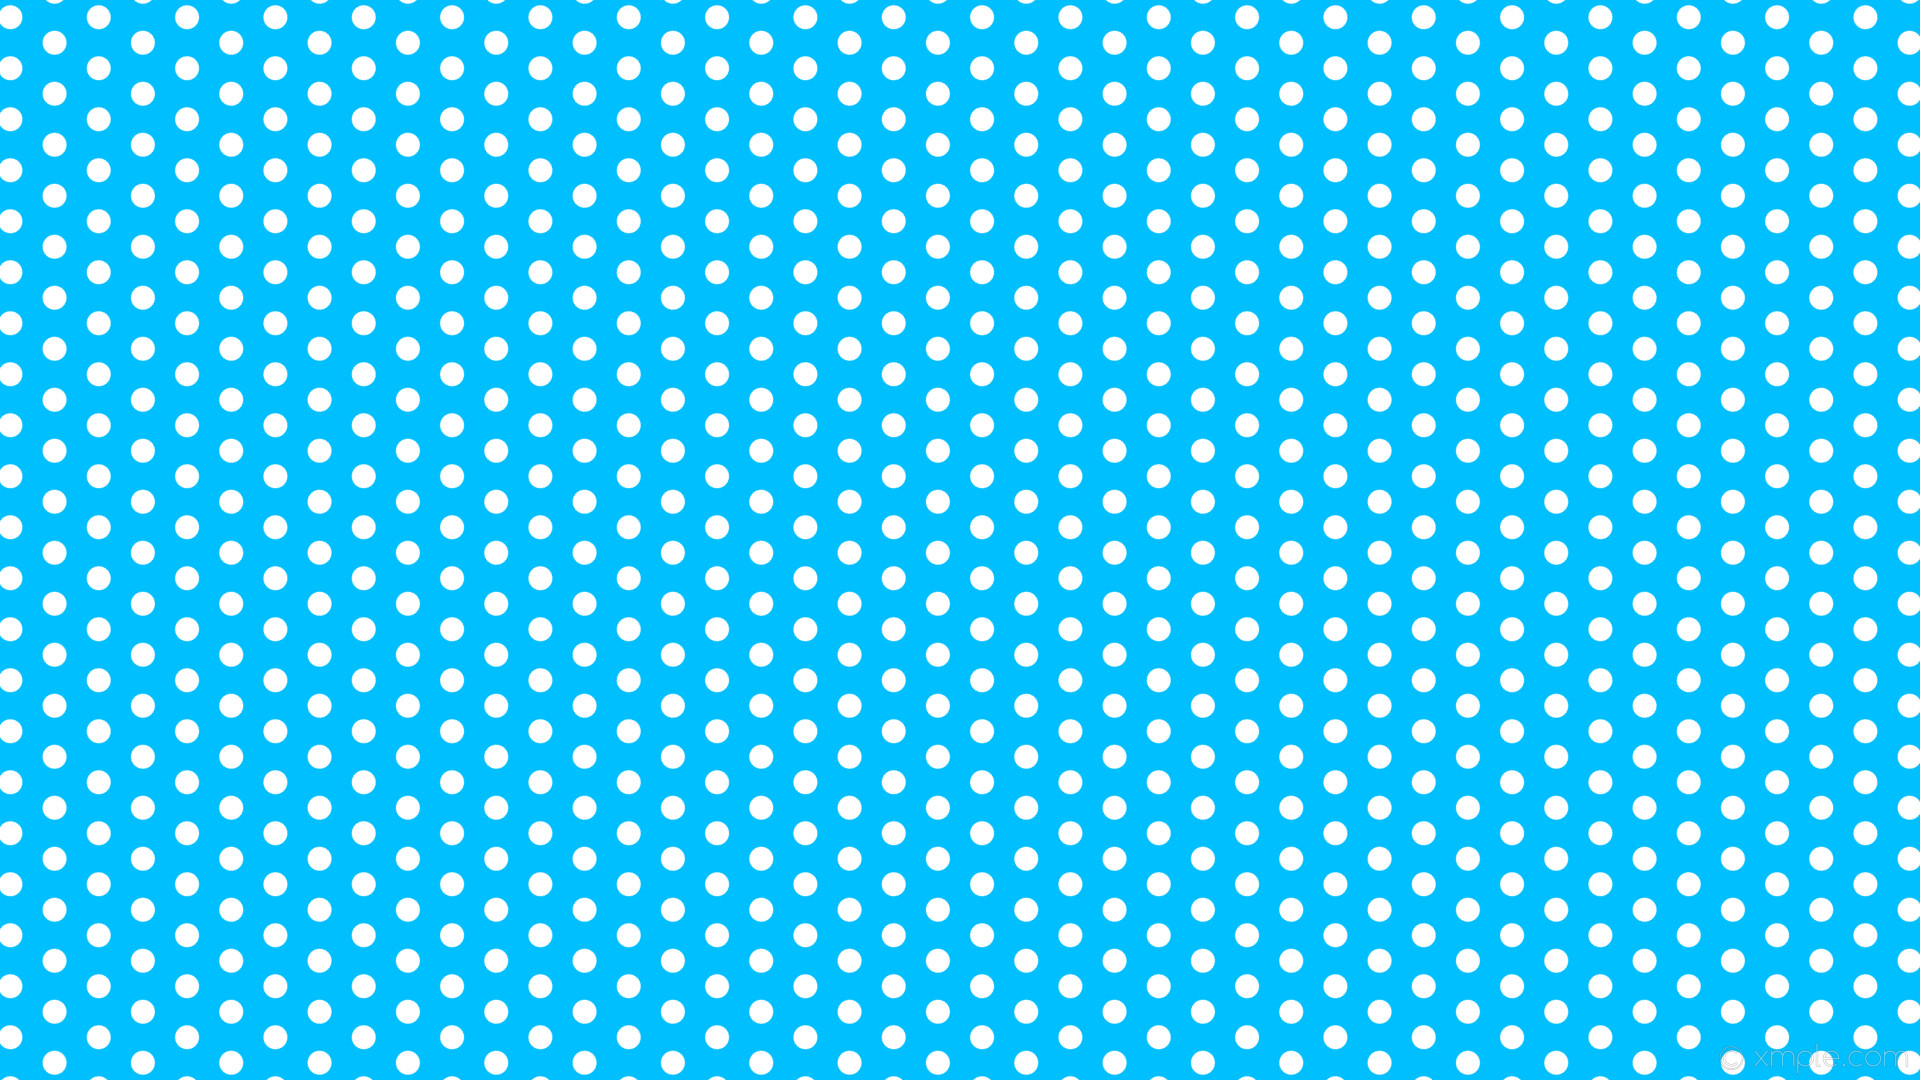 1920x1080 wallpaper hexagon blue white polka dots deep sky blue #00bfff #ffffff  diagonal 30Â°